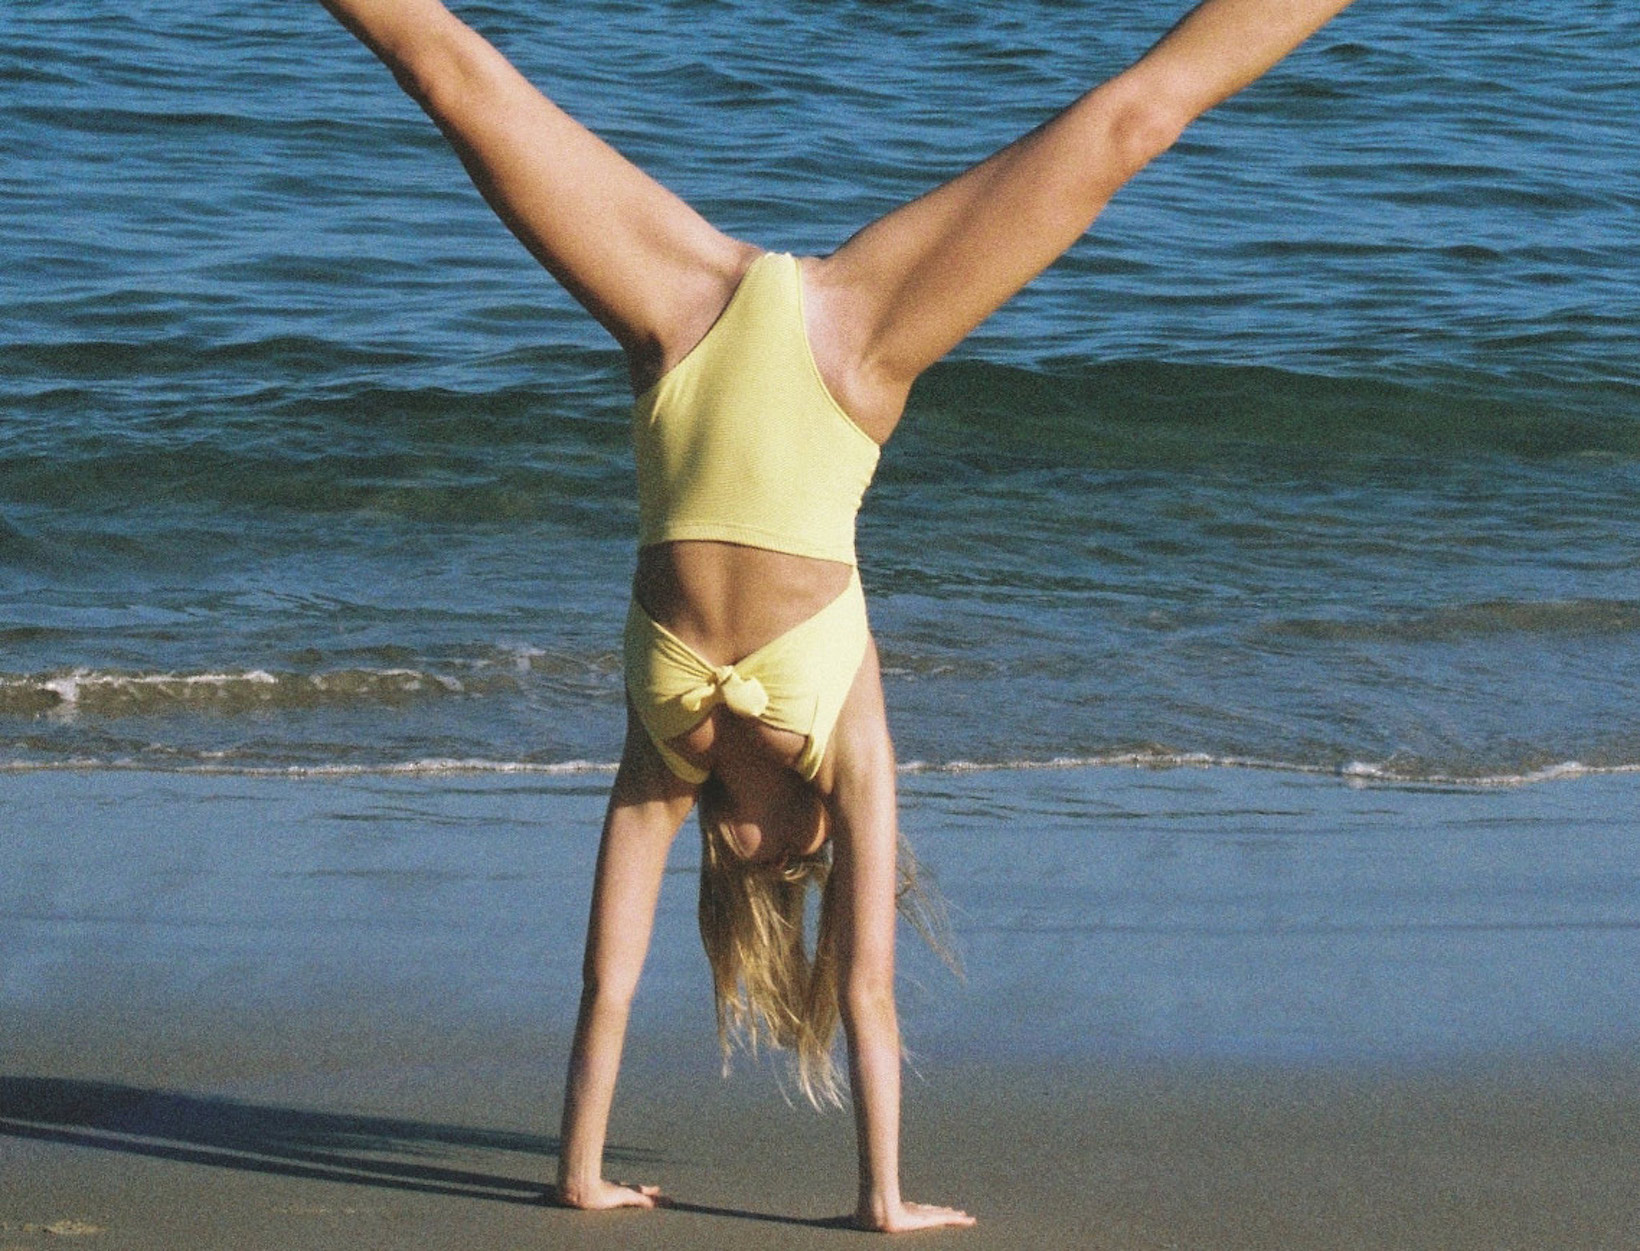 woman doing a cartwheel on the beach